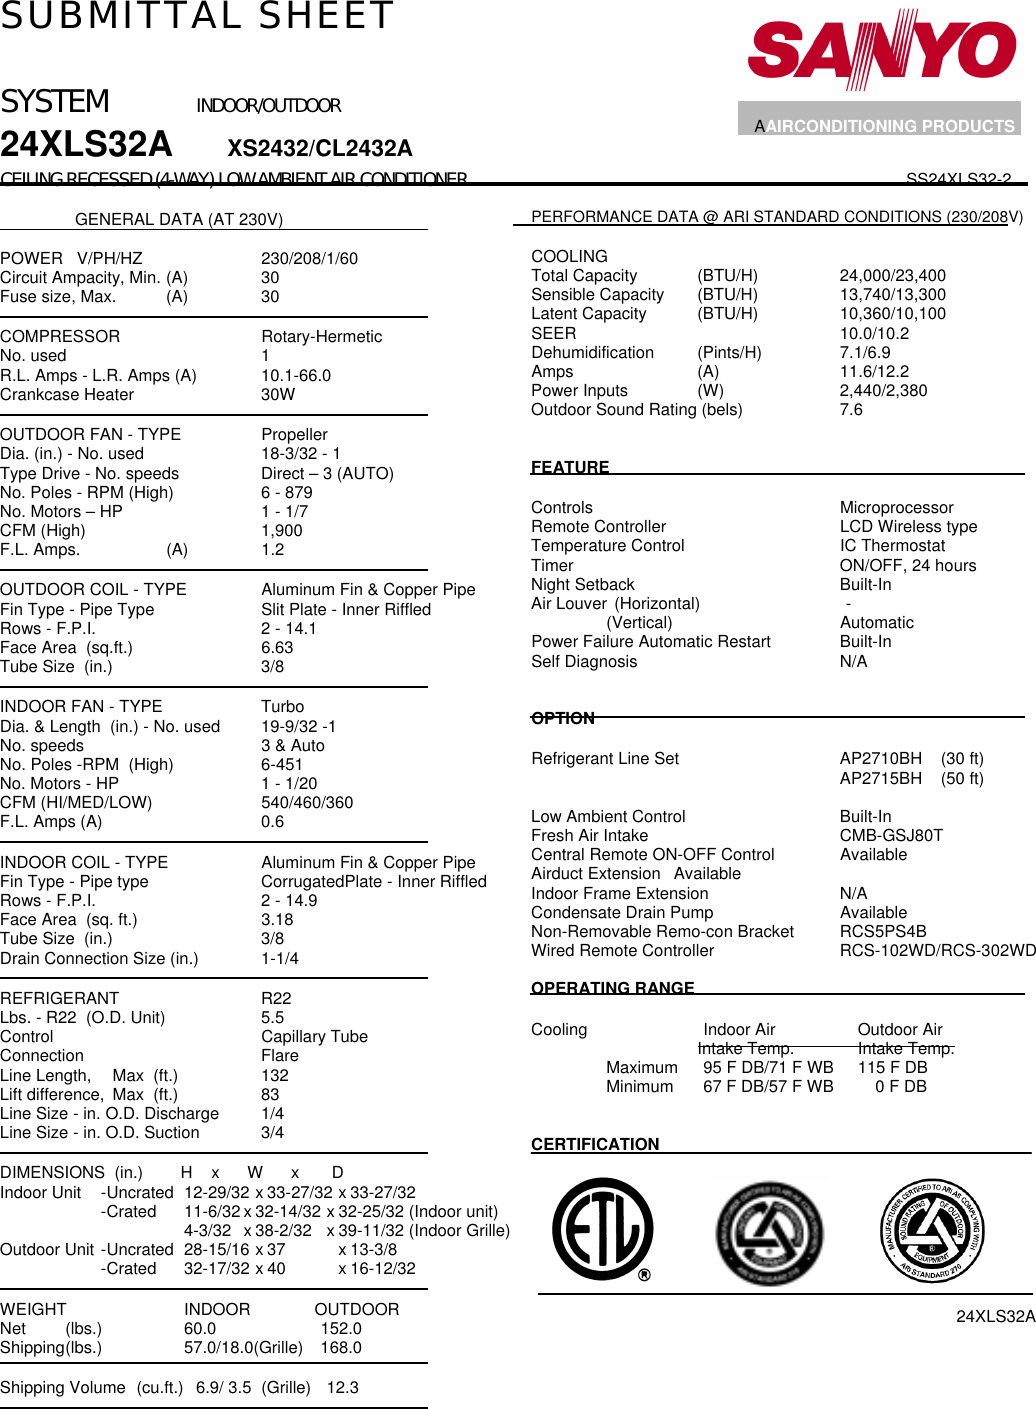 Page 2 of 3 - Sanyo Sanyo-24Xs32A-Users-Manual- SUBMITTAL SHEET  Sanyo-24xs32a-users-manual